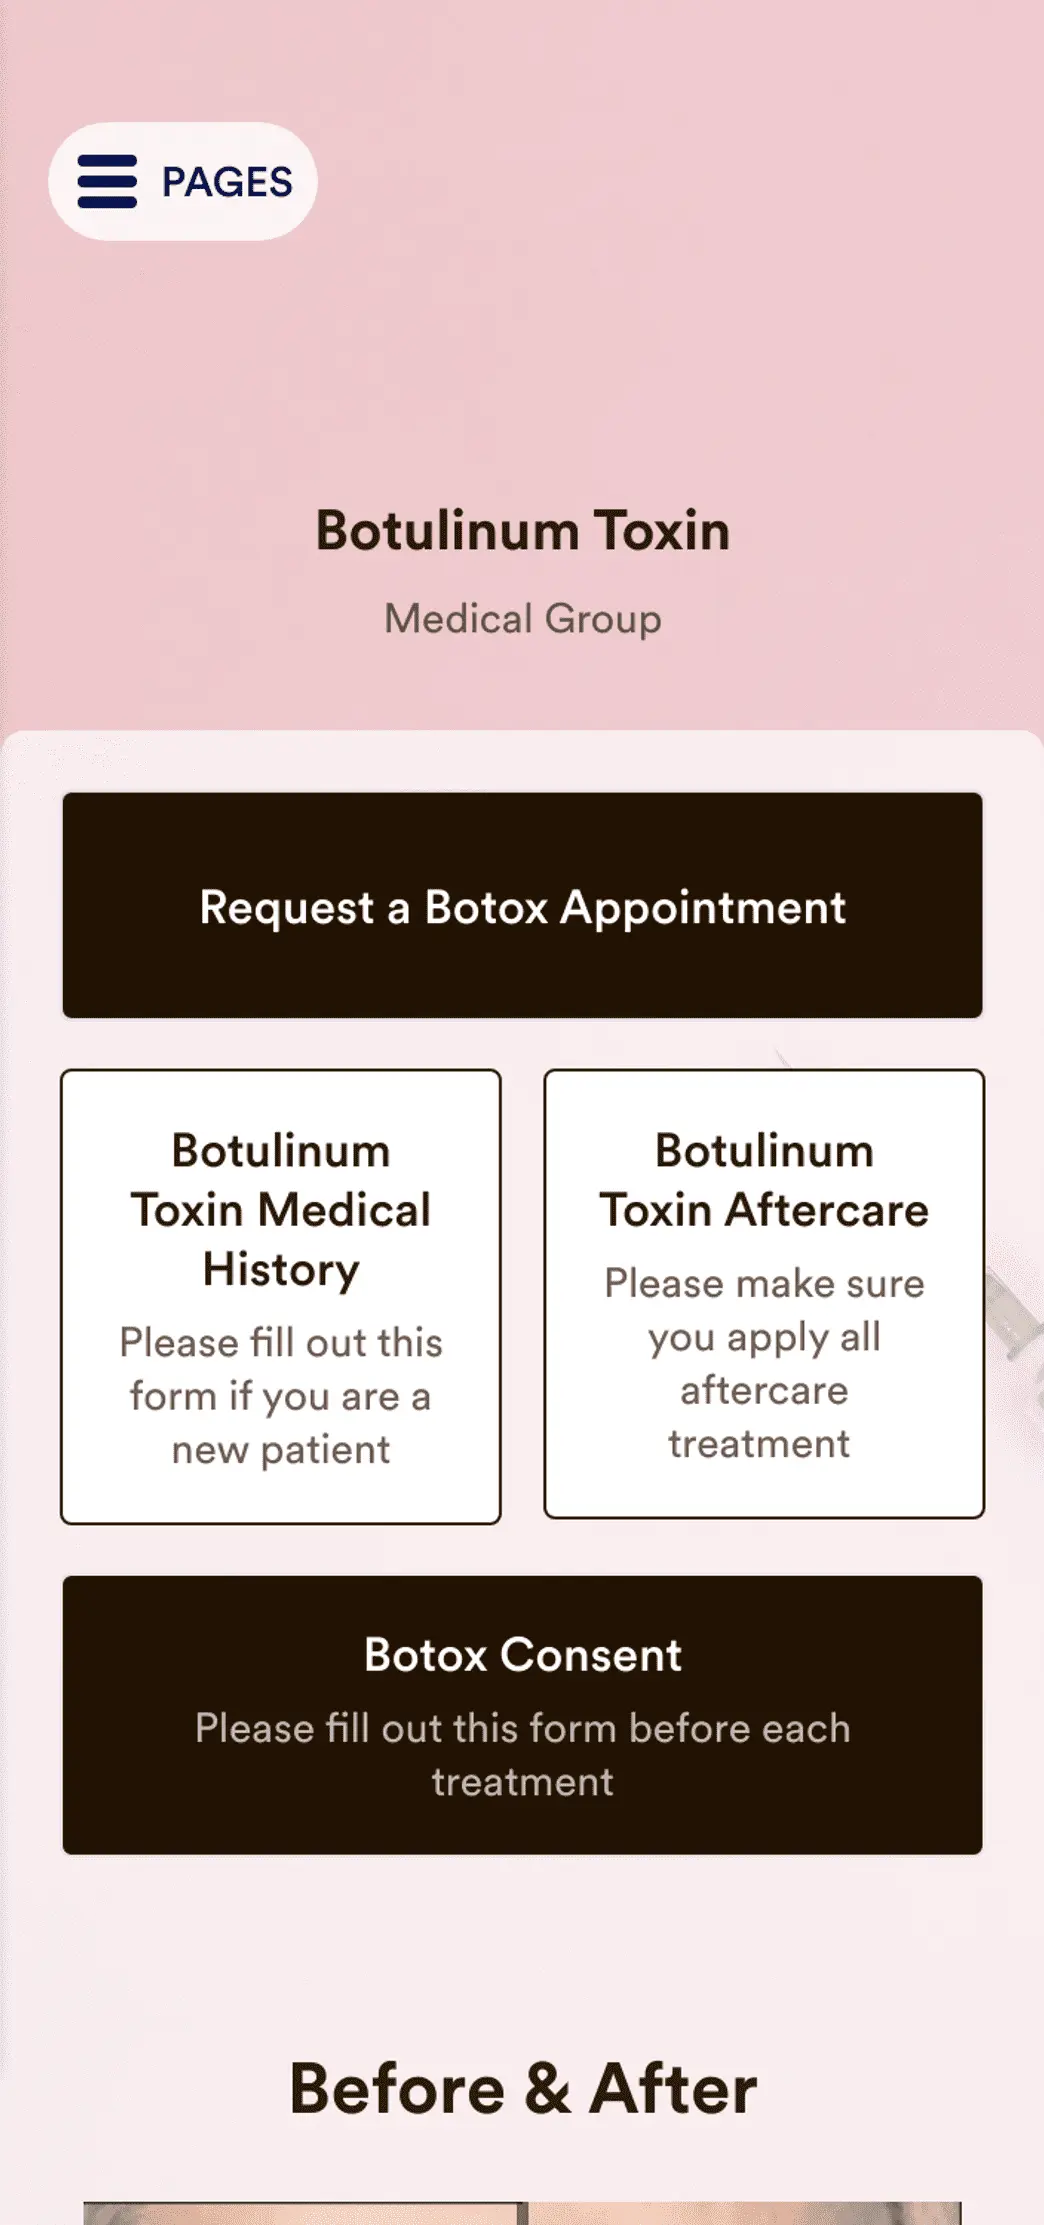 Botox App